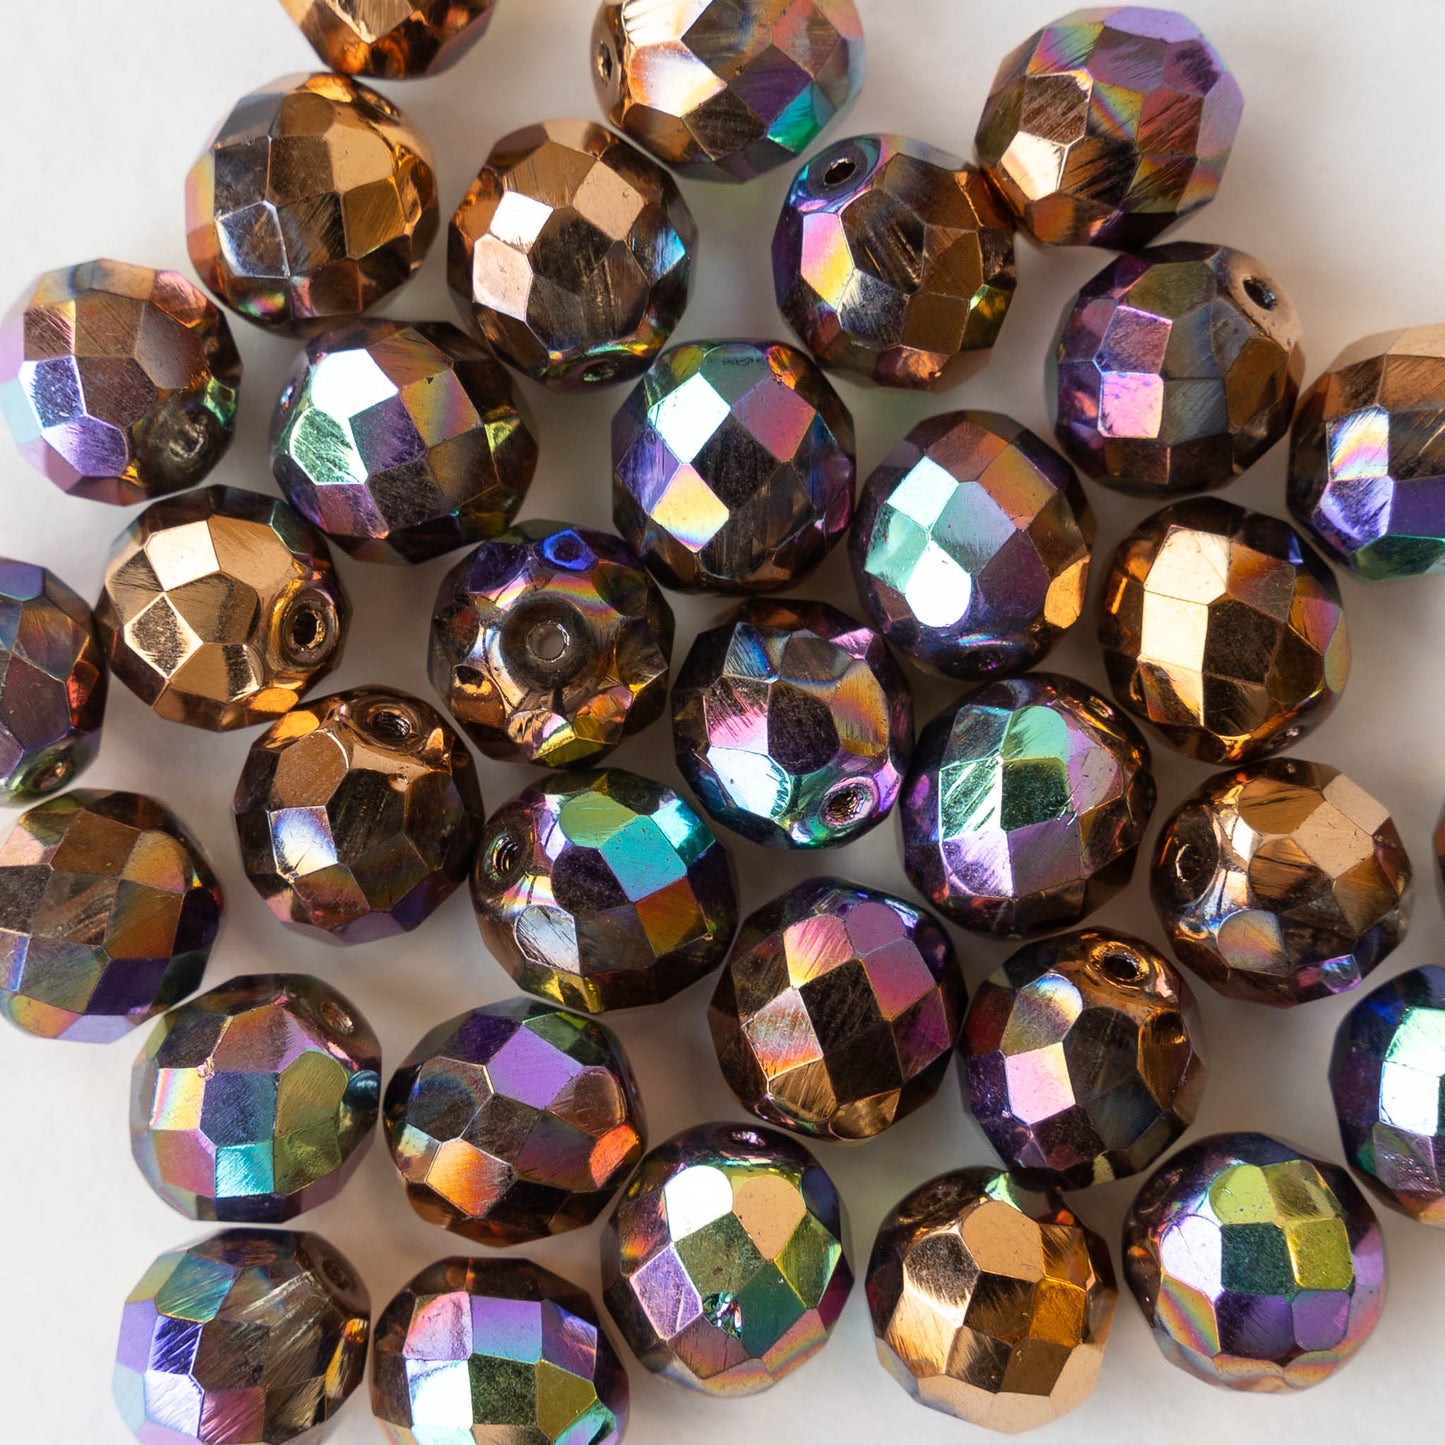 10mm Firepolished Round Glass Beads - Bronze and Gold Iris - 20 beads